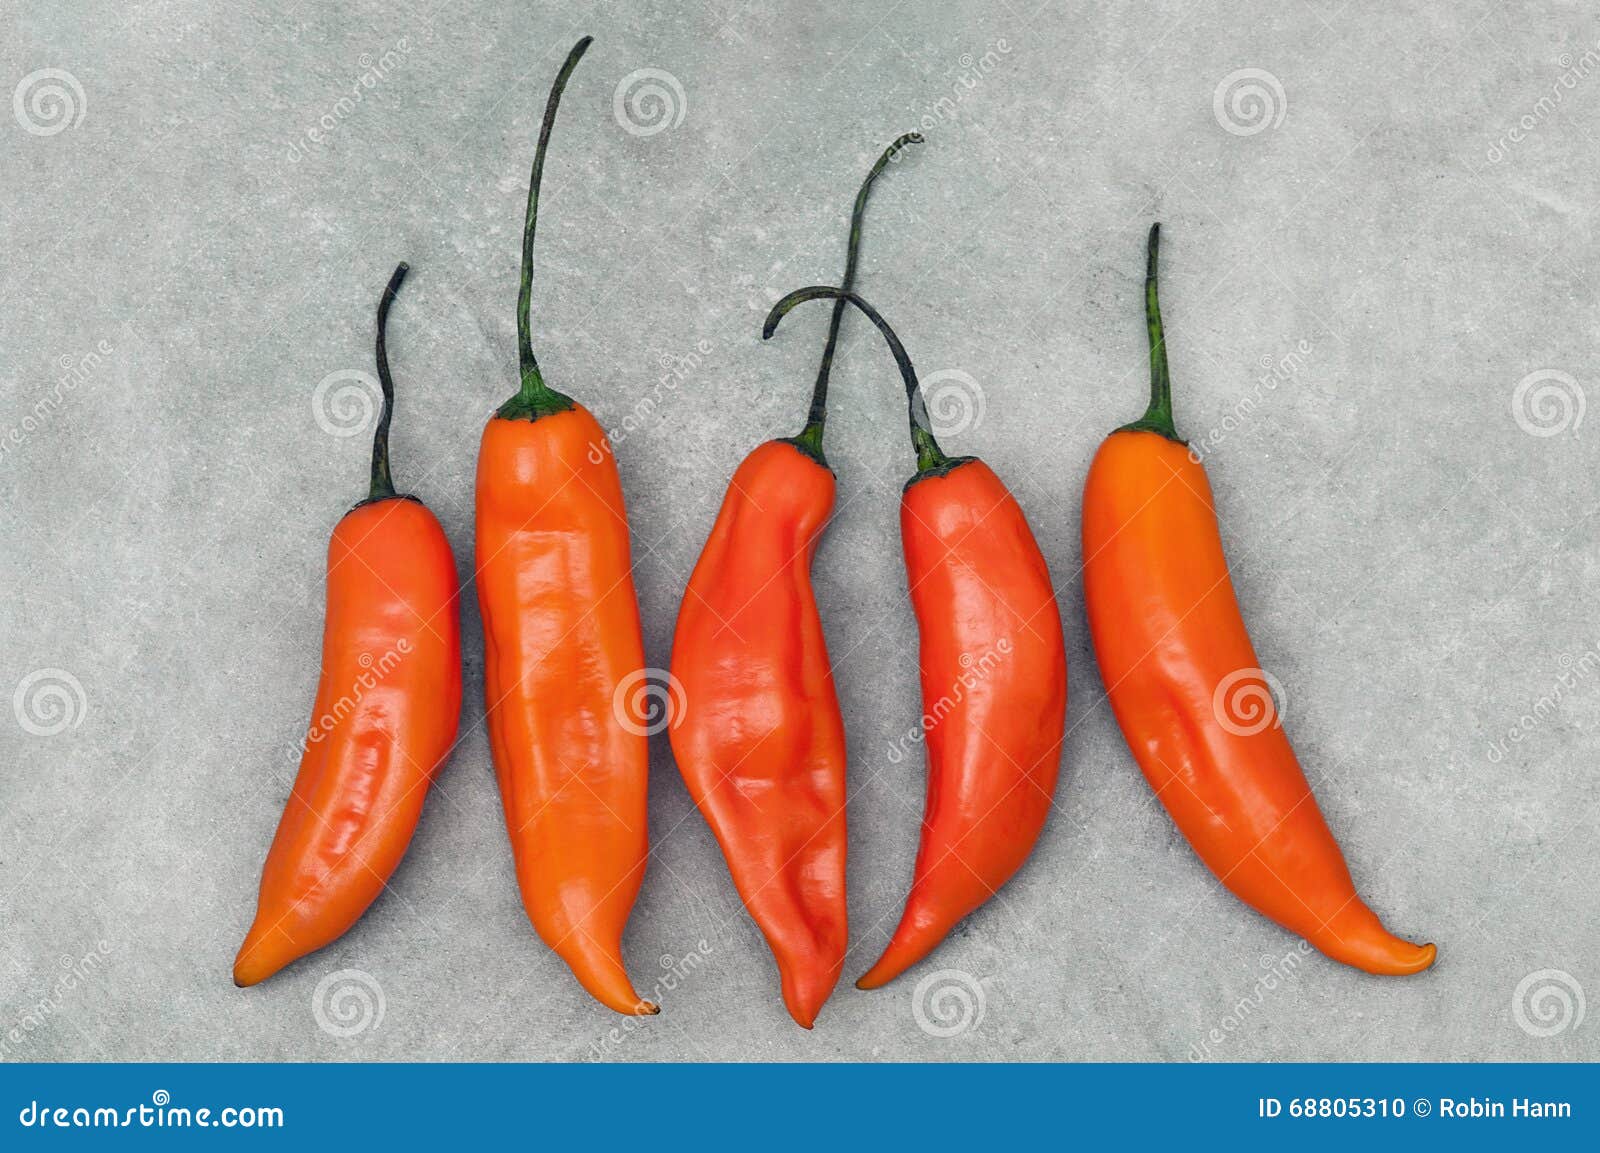 aji amarillo hot chili peppers on stone background